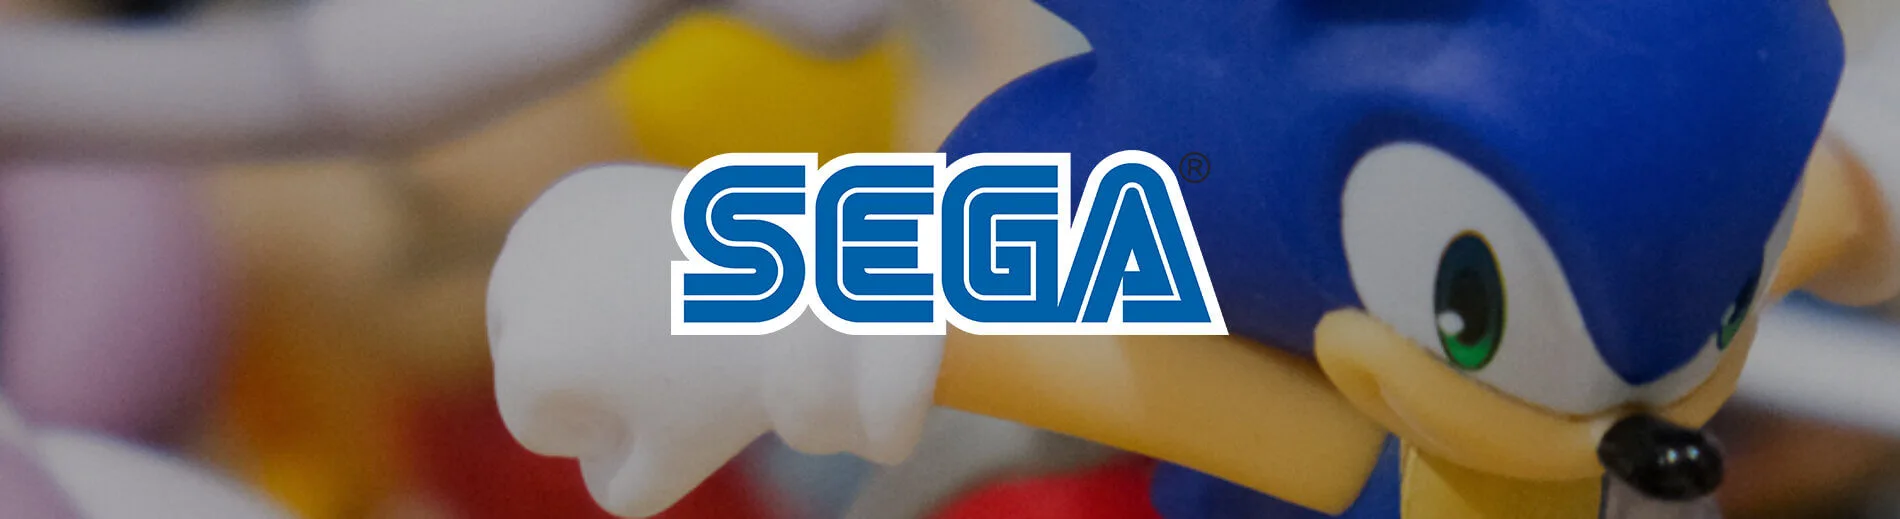 Sega Website and application